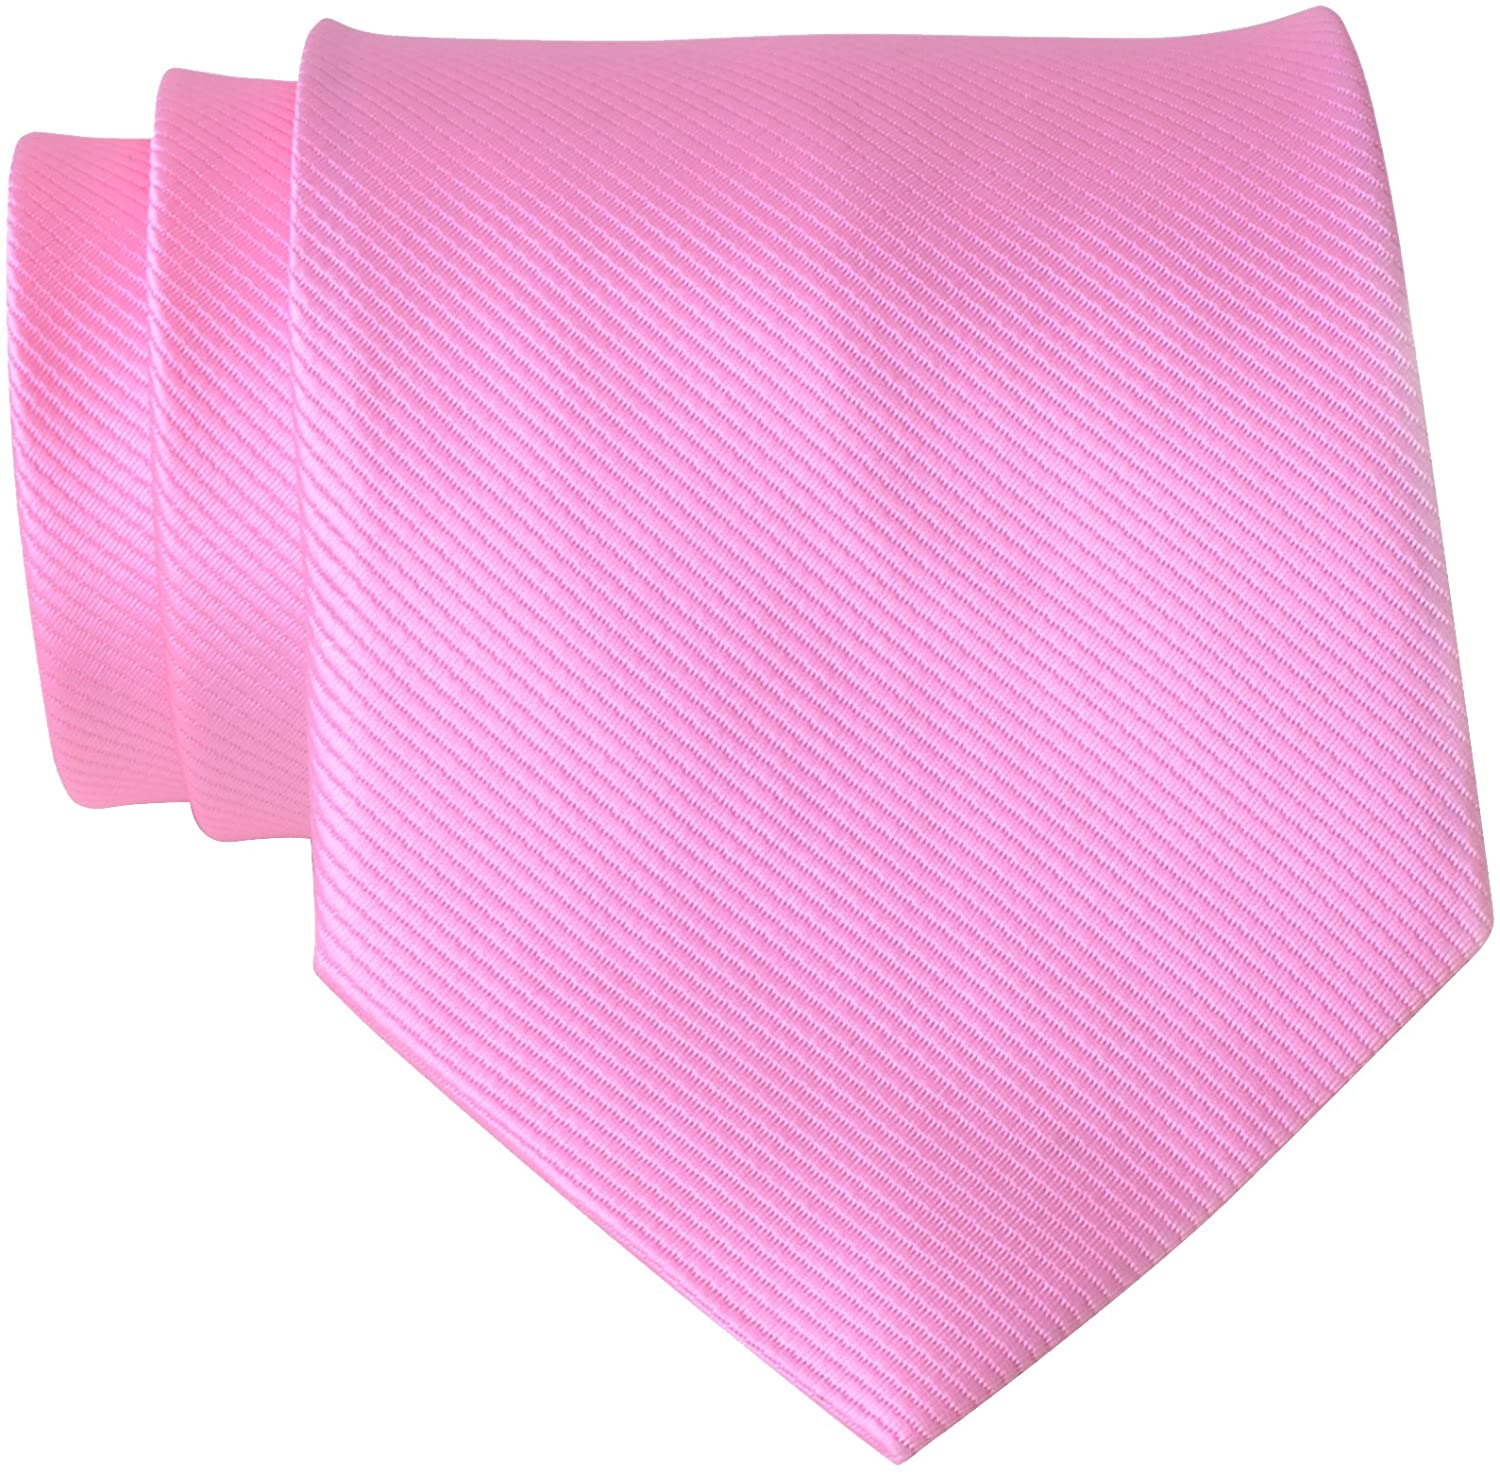 QBSM Mens Solid Polyester Textile Neckties Pure Color Neck Ties